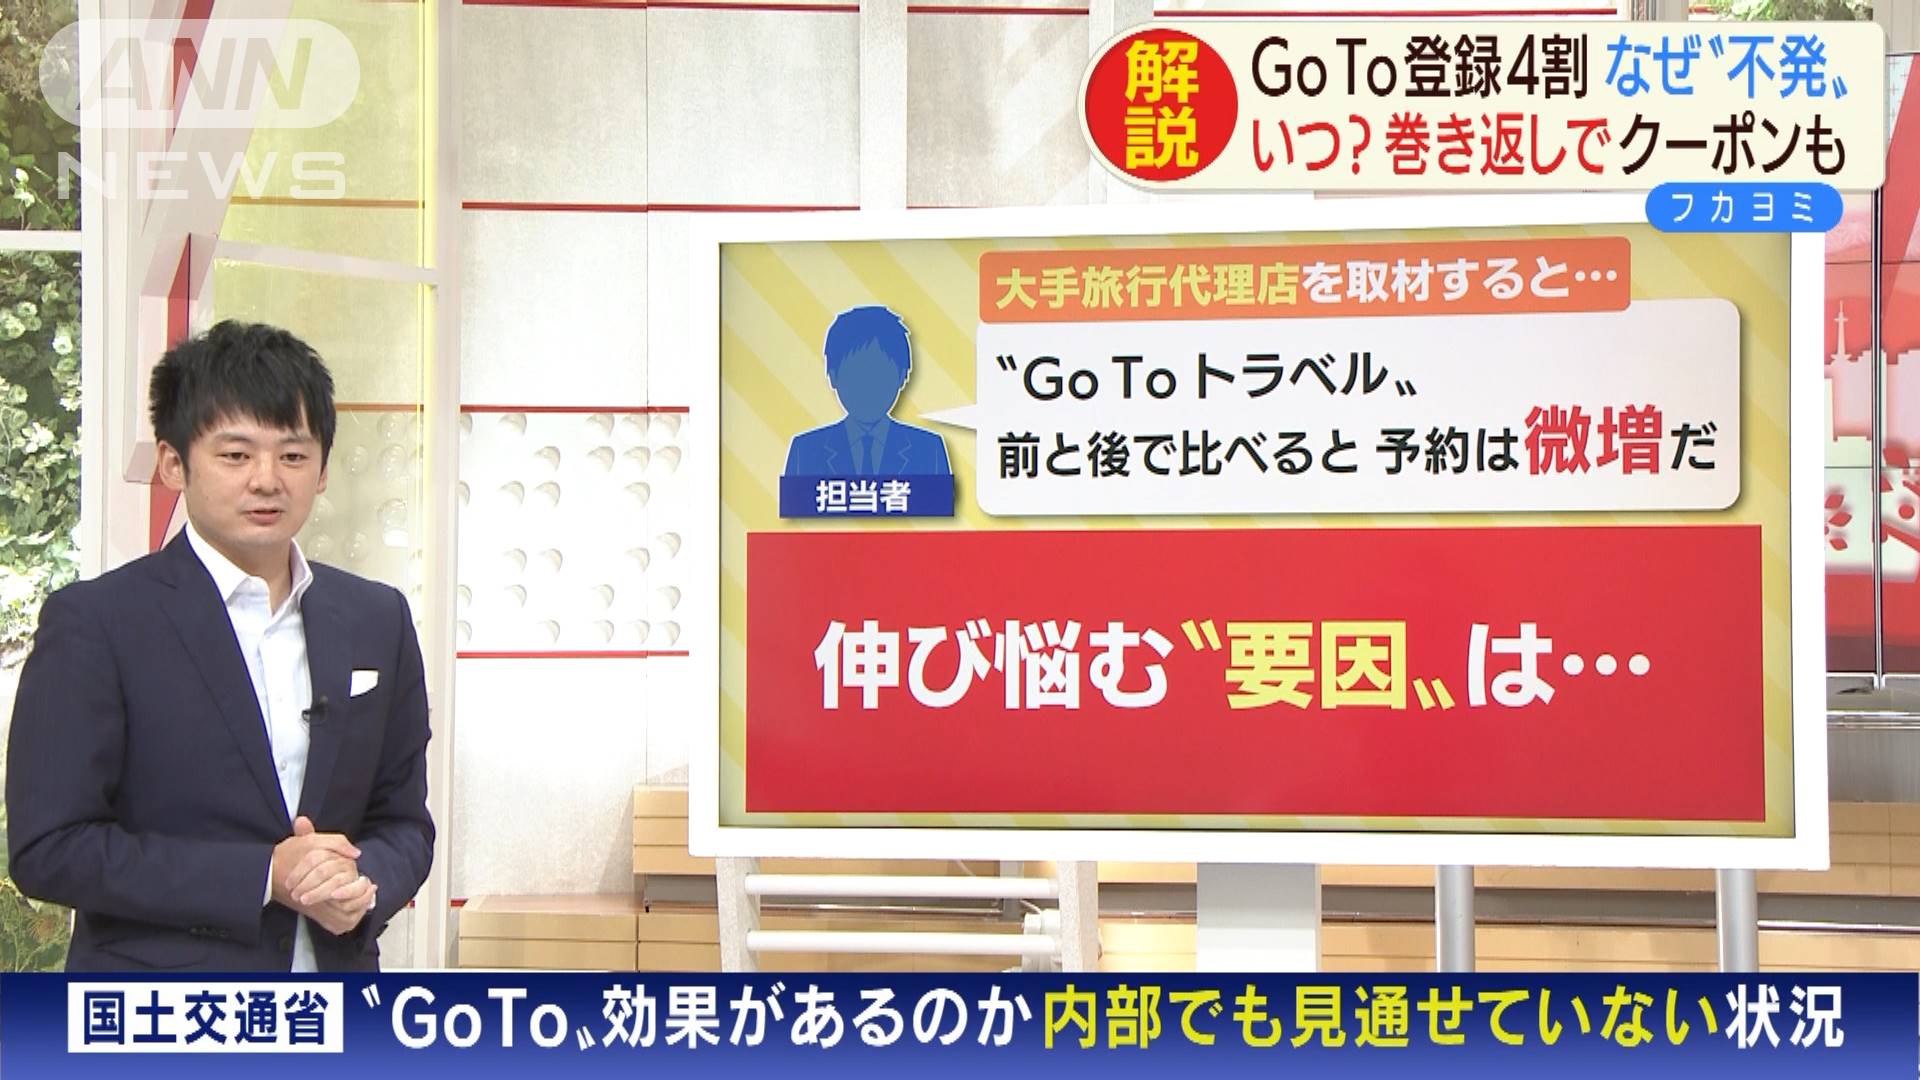 Goto 登録4割 伸び悩む原因とは 記者解説 テレ朝news テレビ朝日のニュースサイト